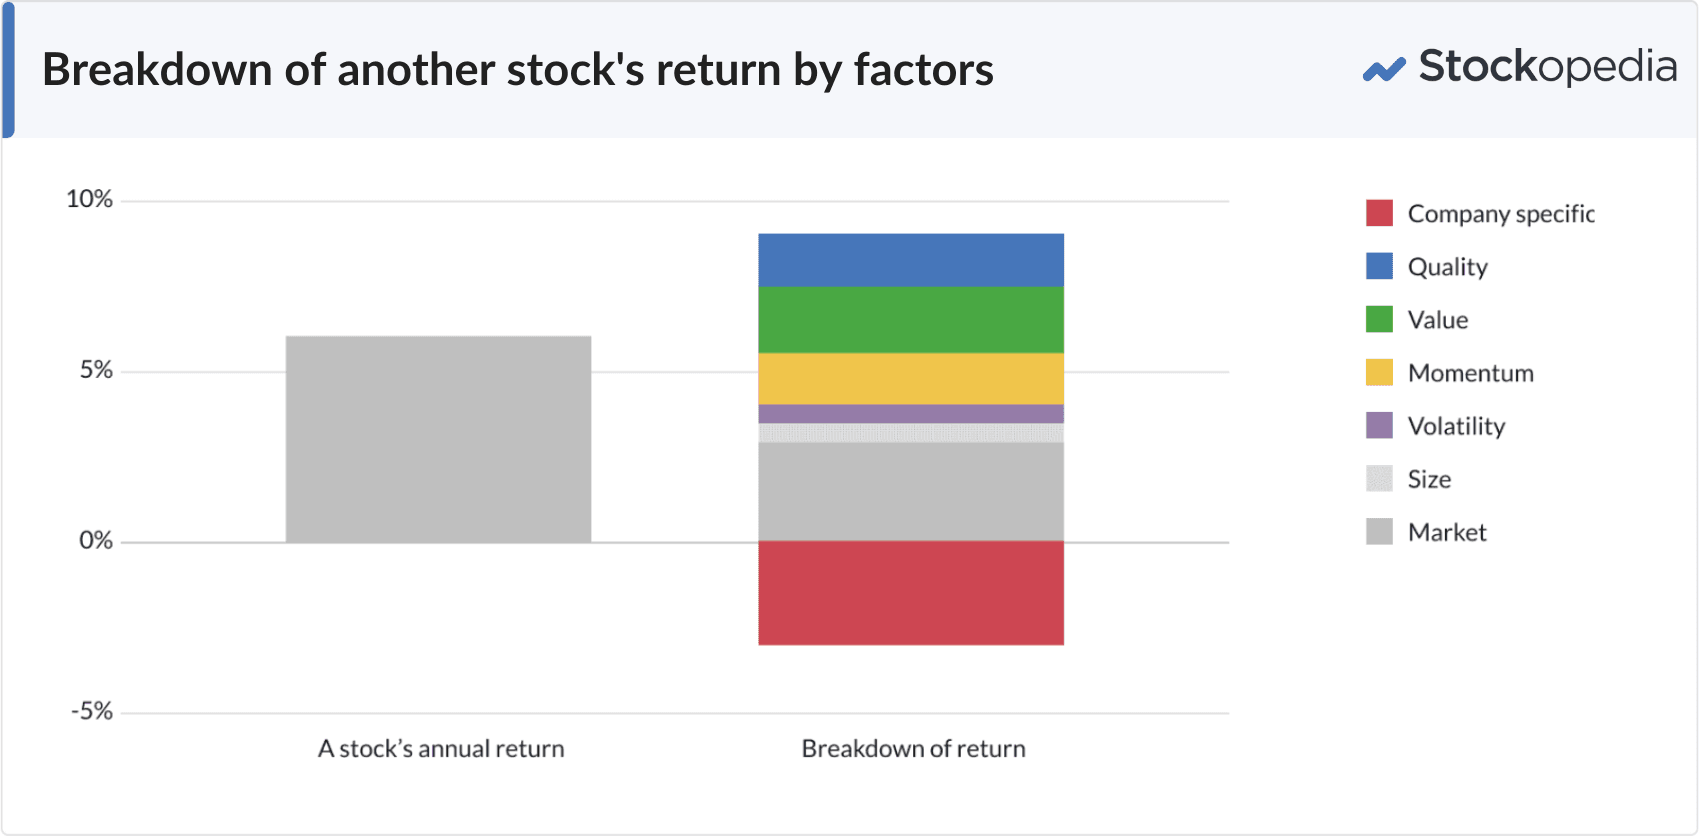 Breakdown of another stock's return by factors